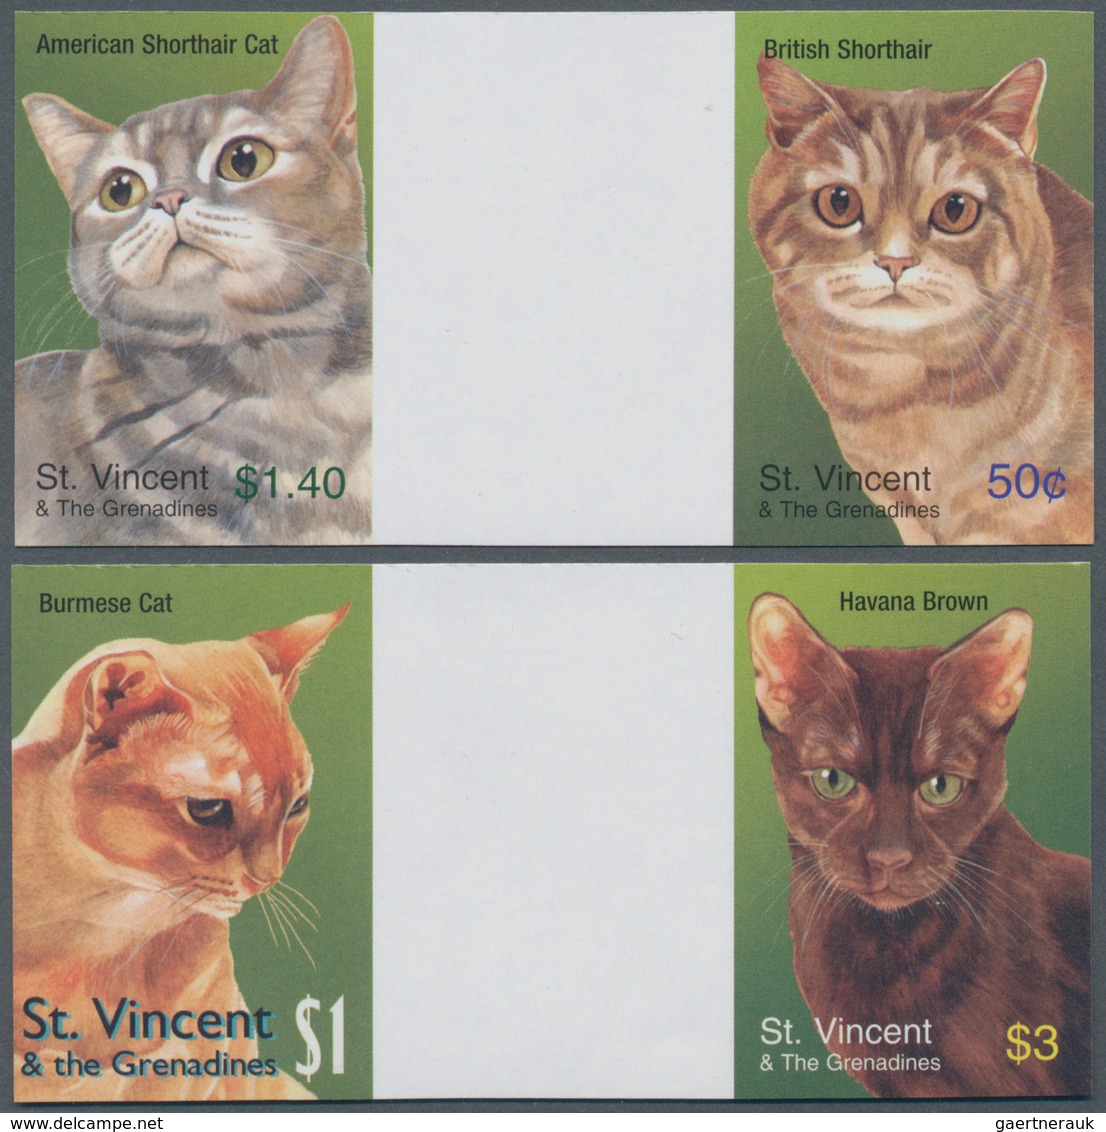 Thematik: Tiere-Katzen / Animals-cats: 2003, St. Vincent. Complete Set "Cats" In 2 Horizontal Gutter - Gatti